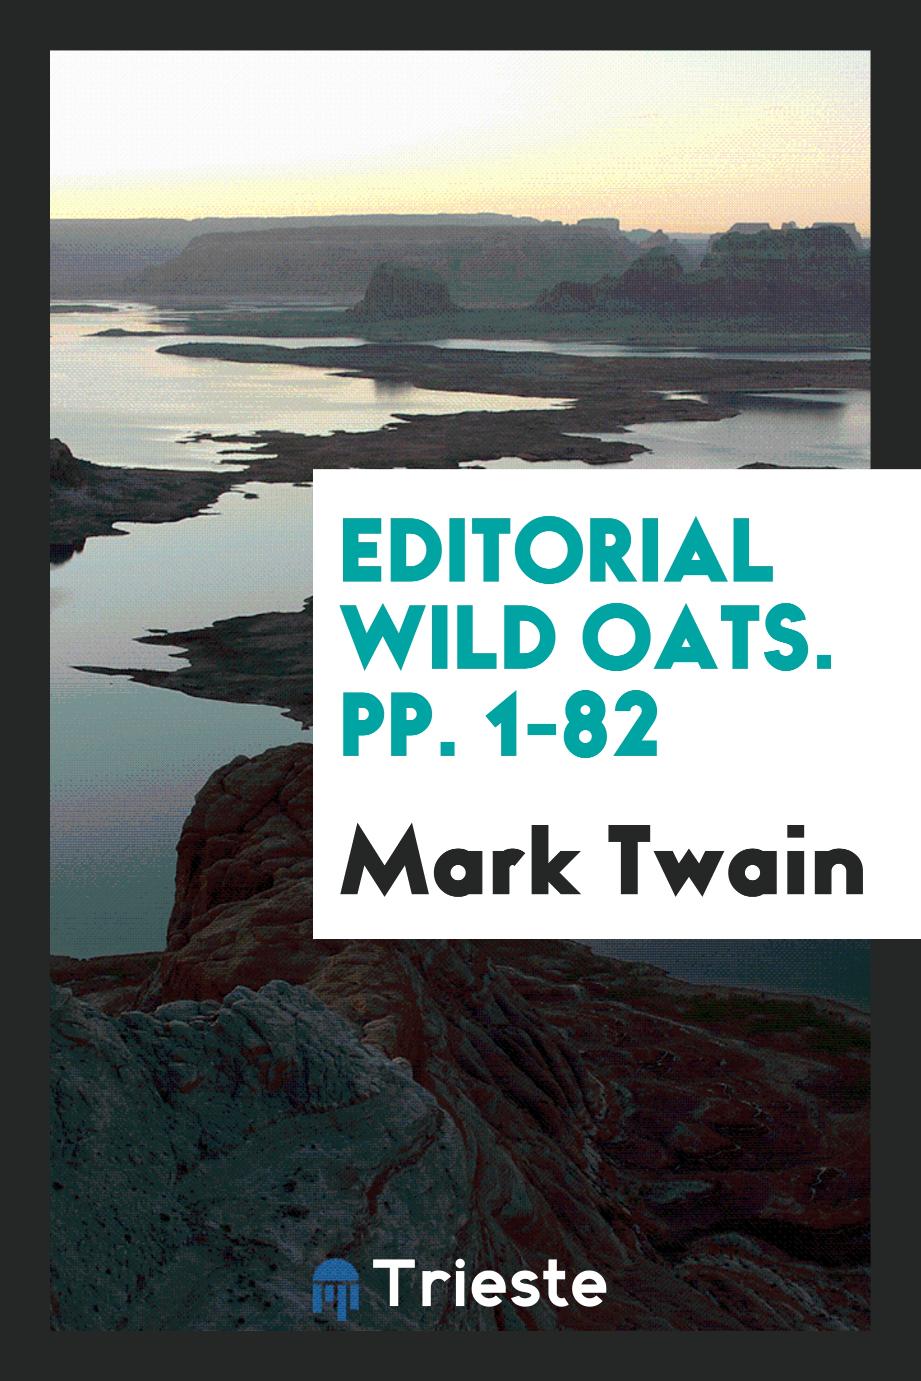 Editorial Wild Oats. pp. 1-82